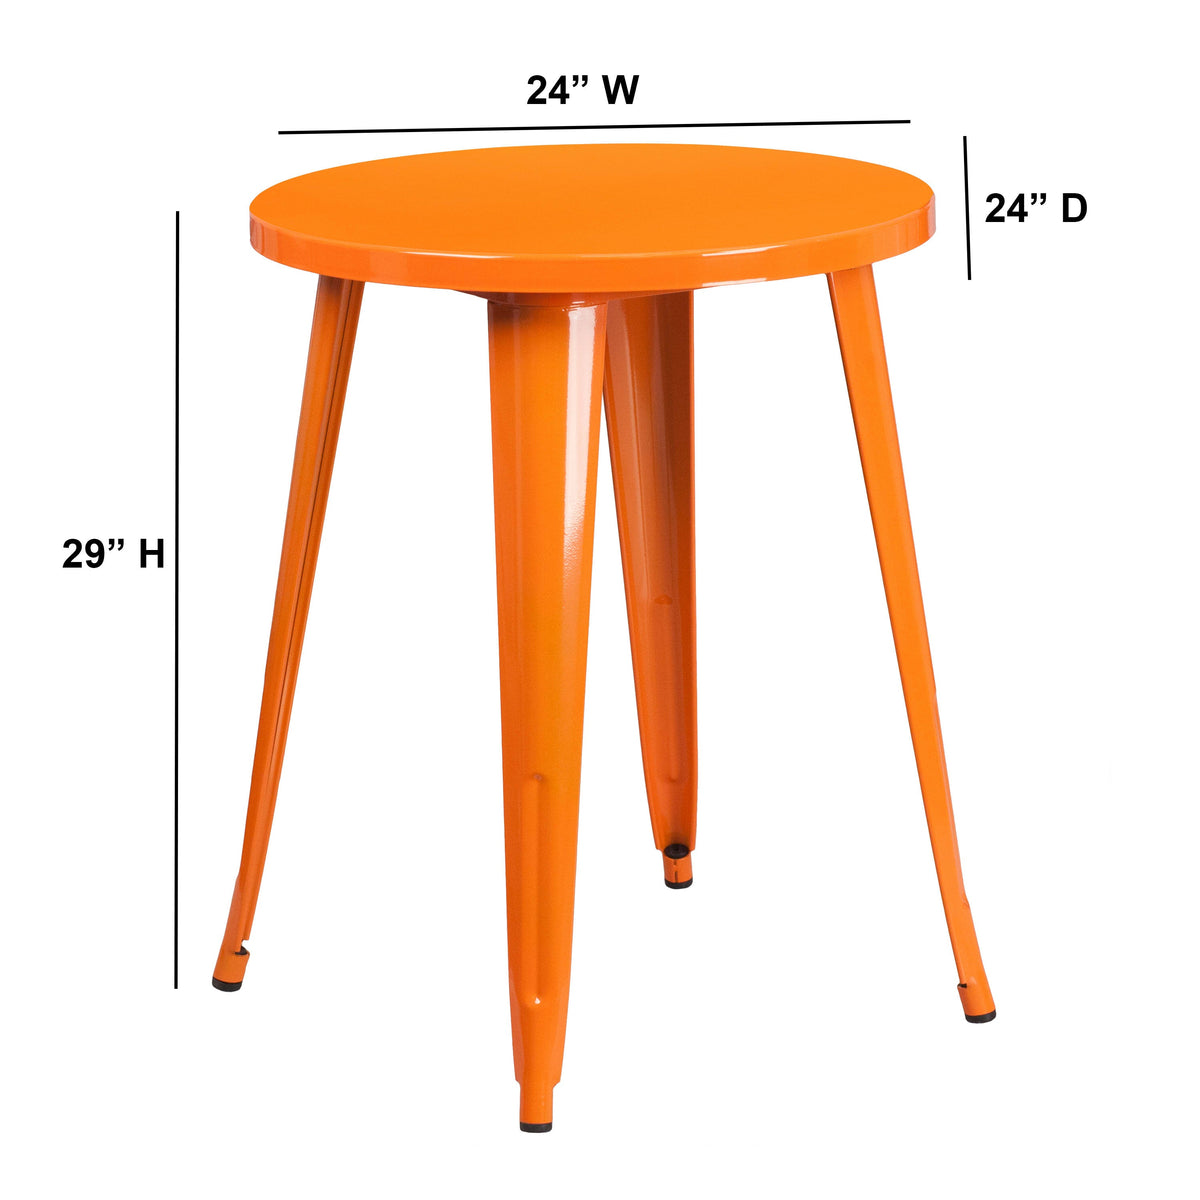 Orange |#| 24inch Round Orange Metal Indoor-Outdoor Table - Restaurant Furniture - Café Table